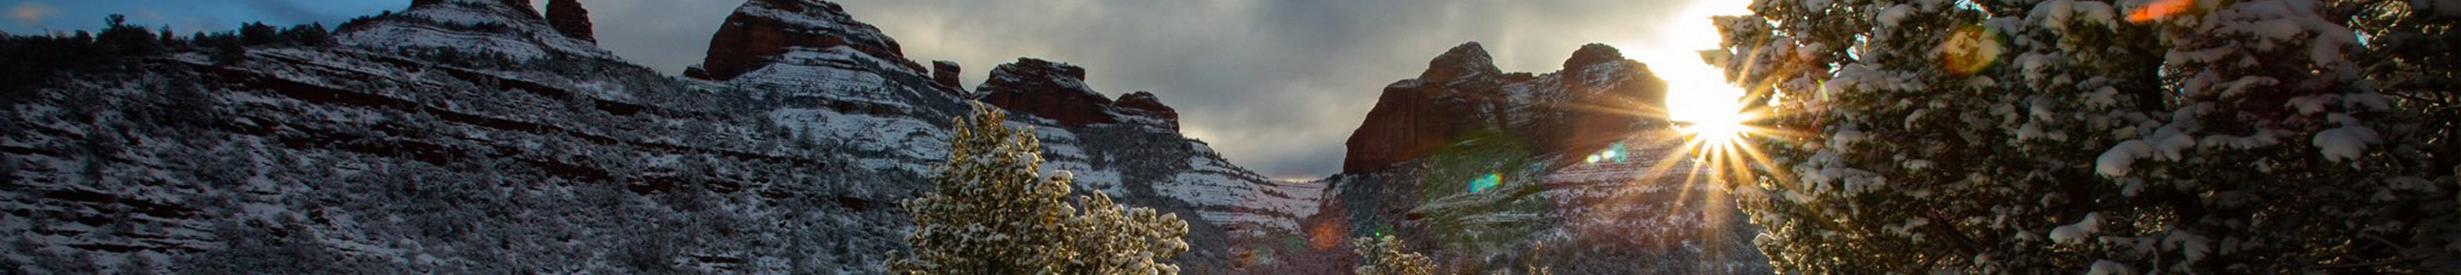 Northern Arizona Landscape Photograph by Larry Hendricks